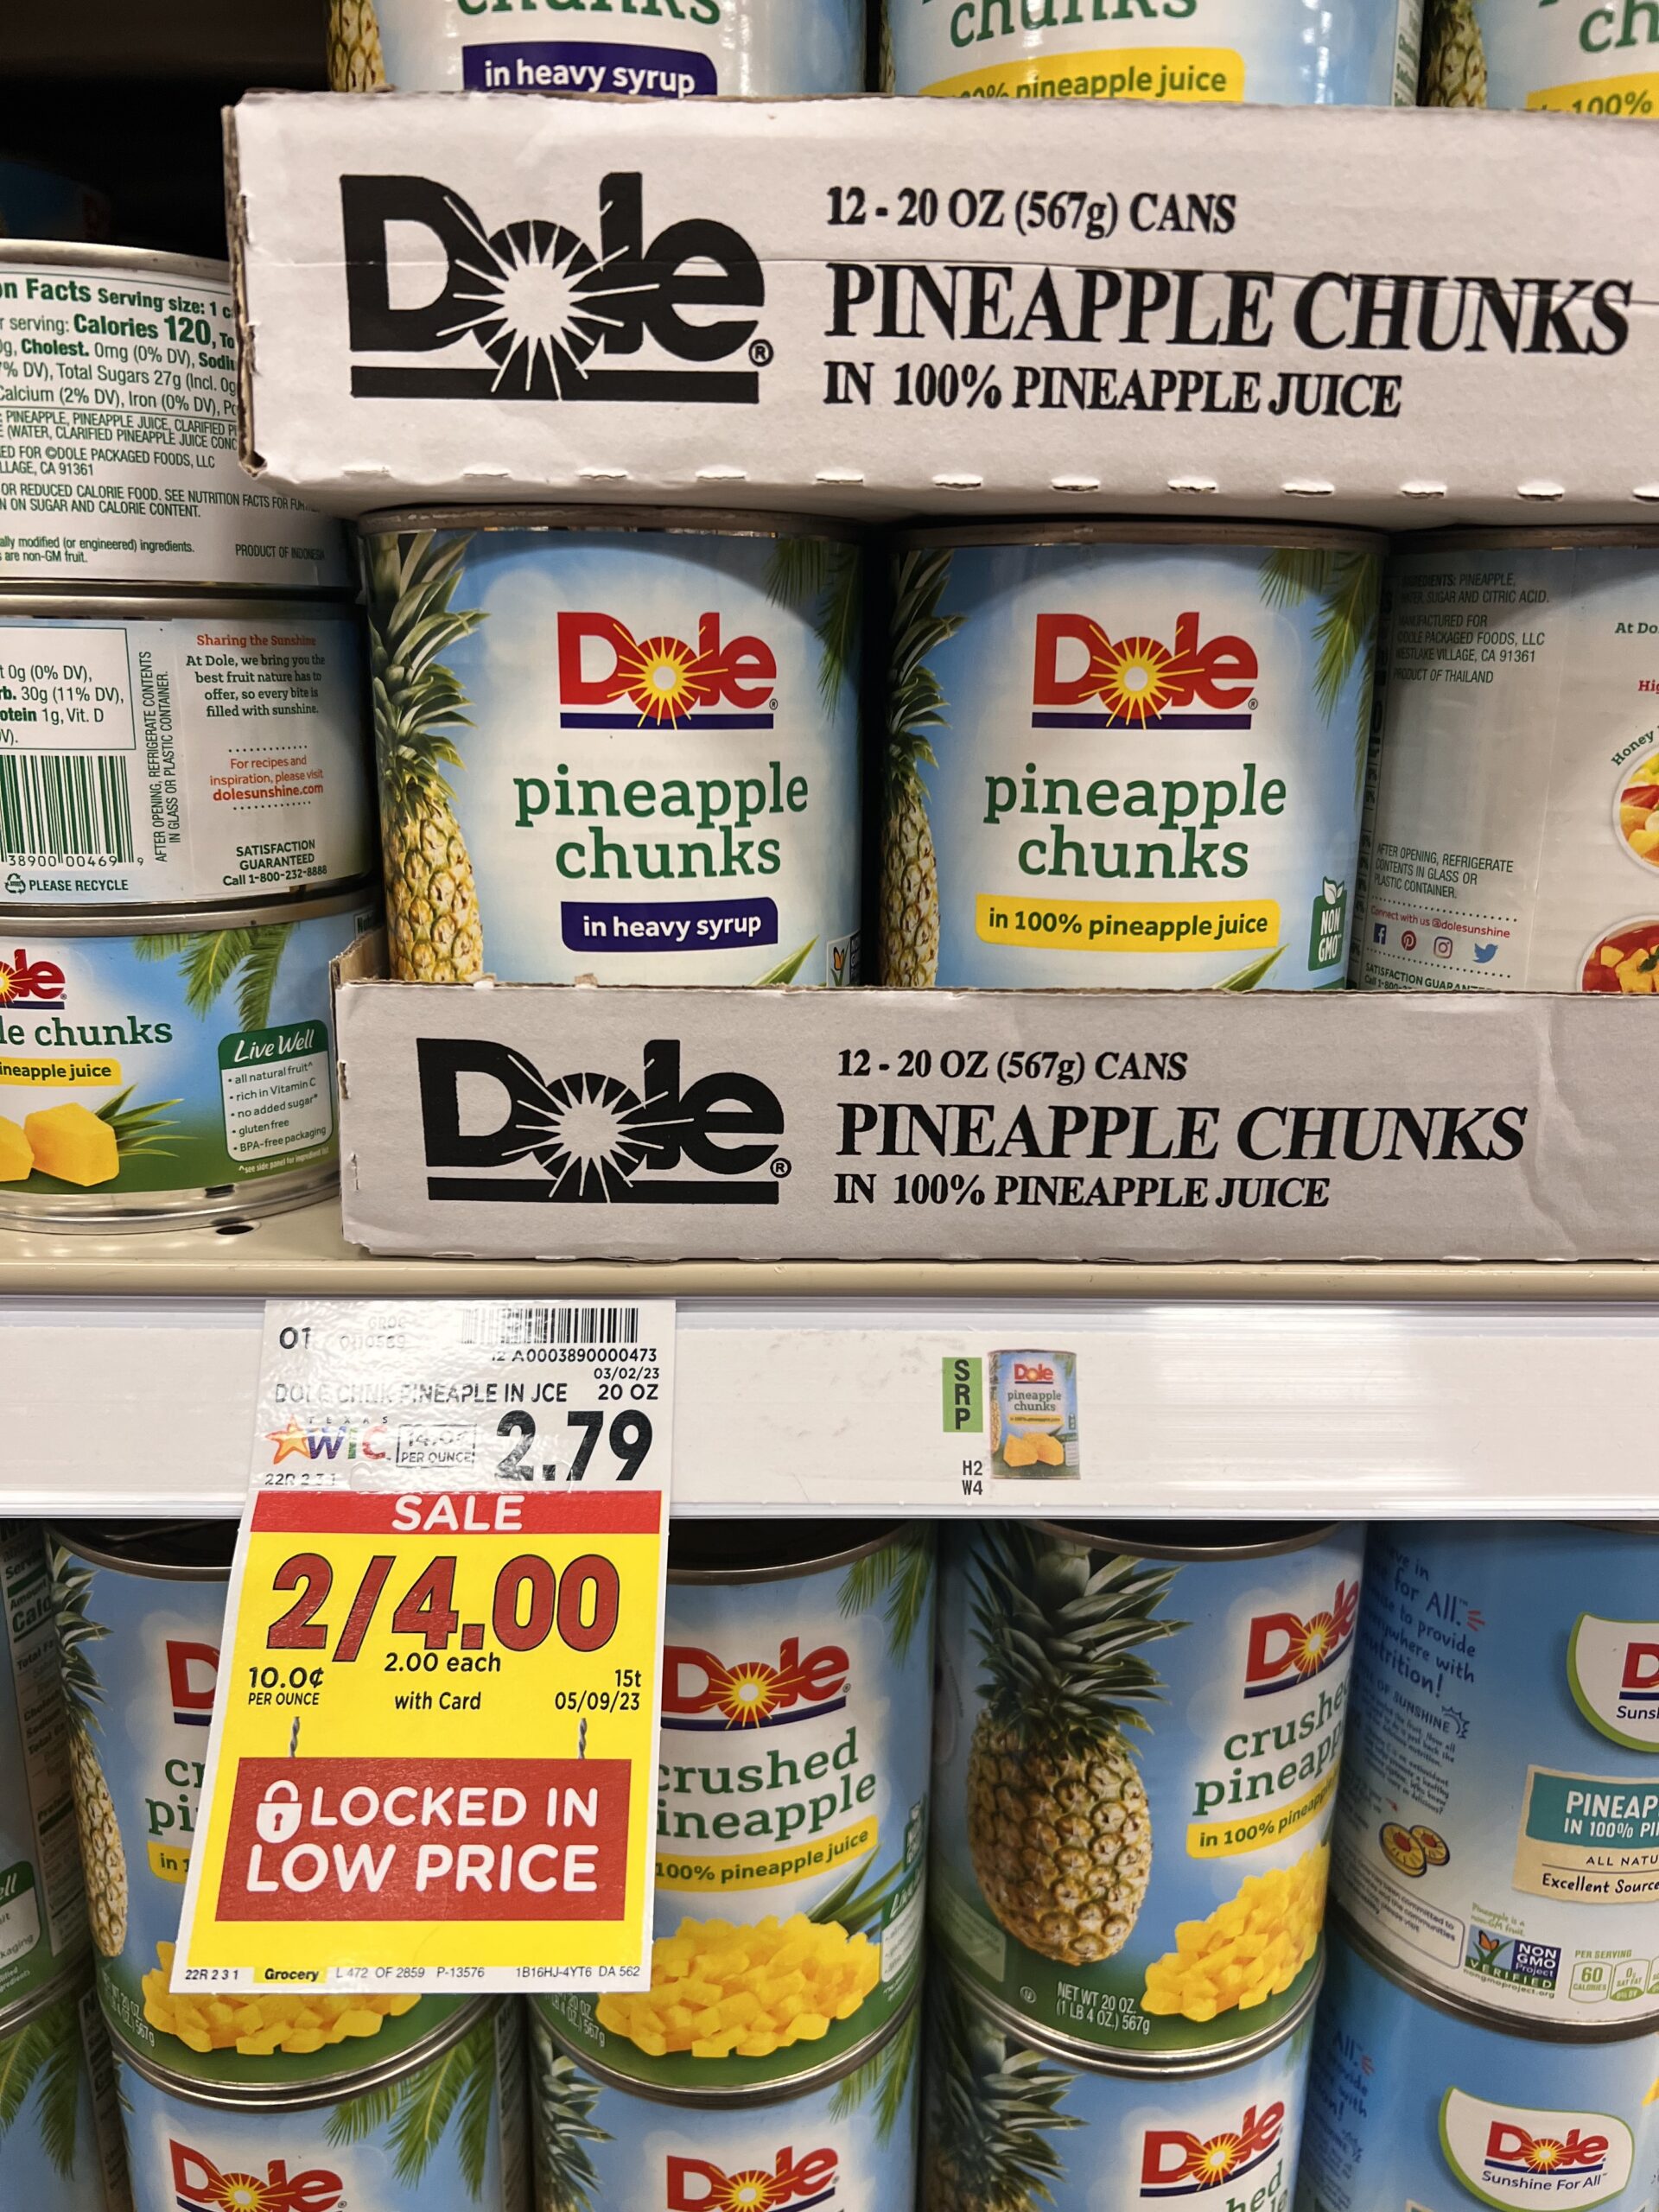 dole canned pineapple kroger shelf image 2